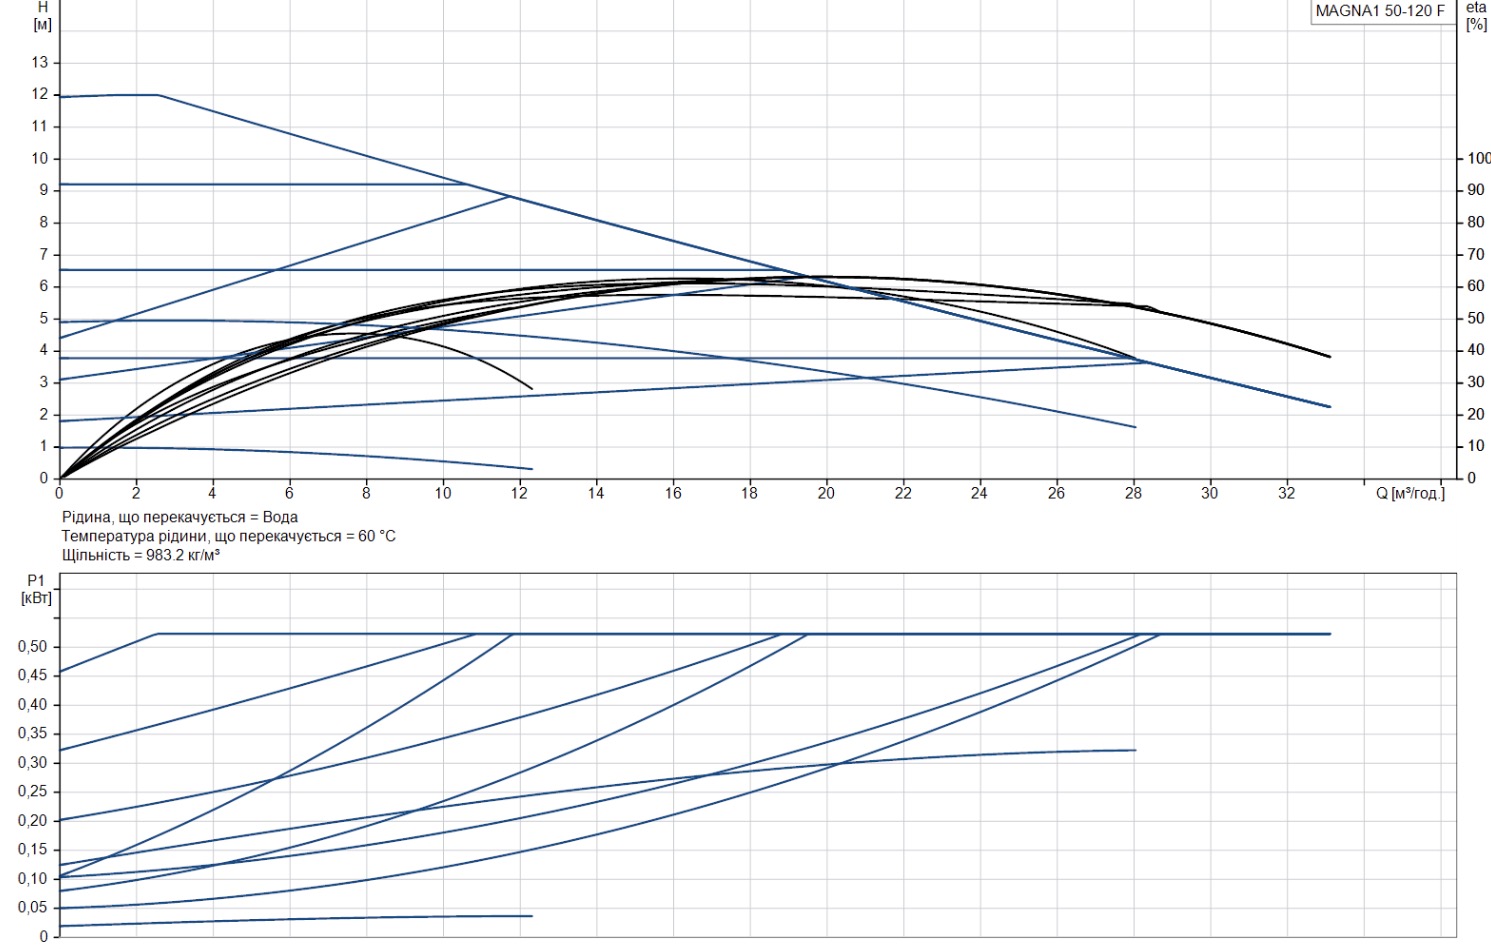 Grundfos Magna1 50-120 F 280 (99221336) Діаграма продуктивності